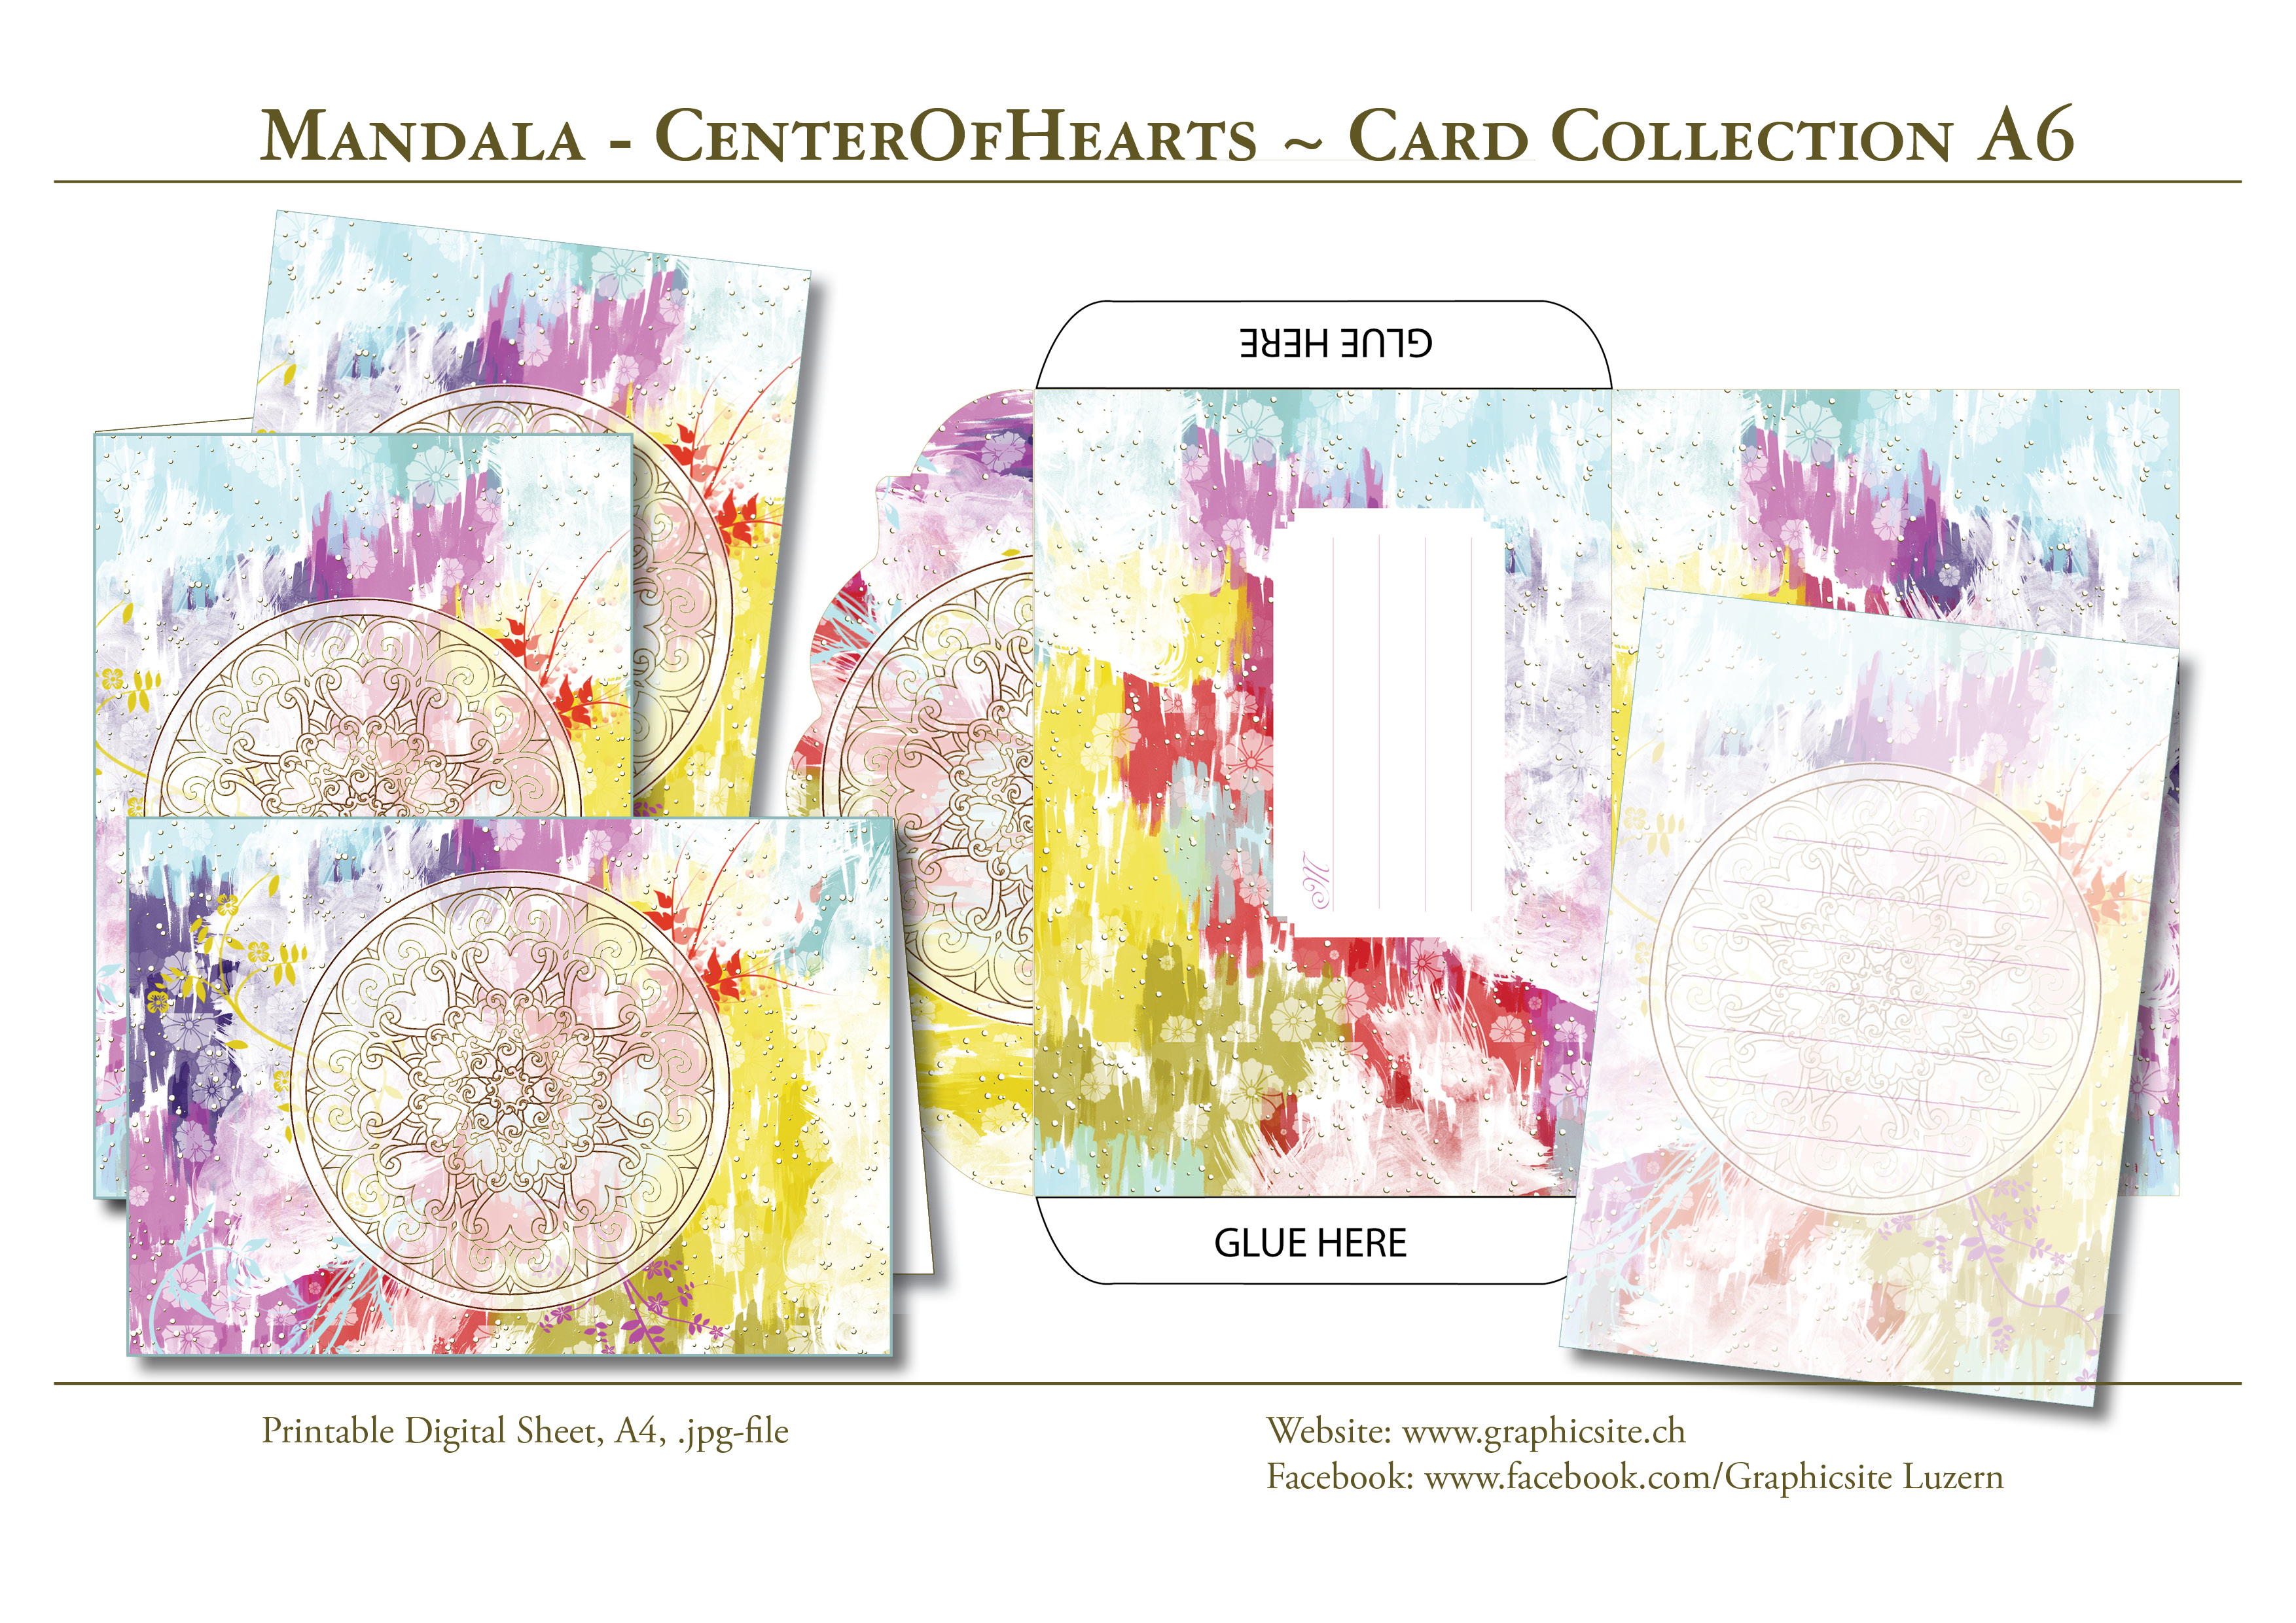 Printable Digital Sheets - DIN A-Formats - MANDAL CenterOfHearts - Card Collection - printables, cards, greeting cards, watercolor, yoga, meditation,